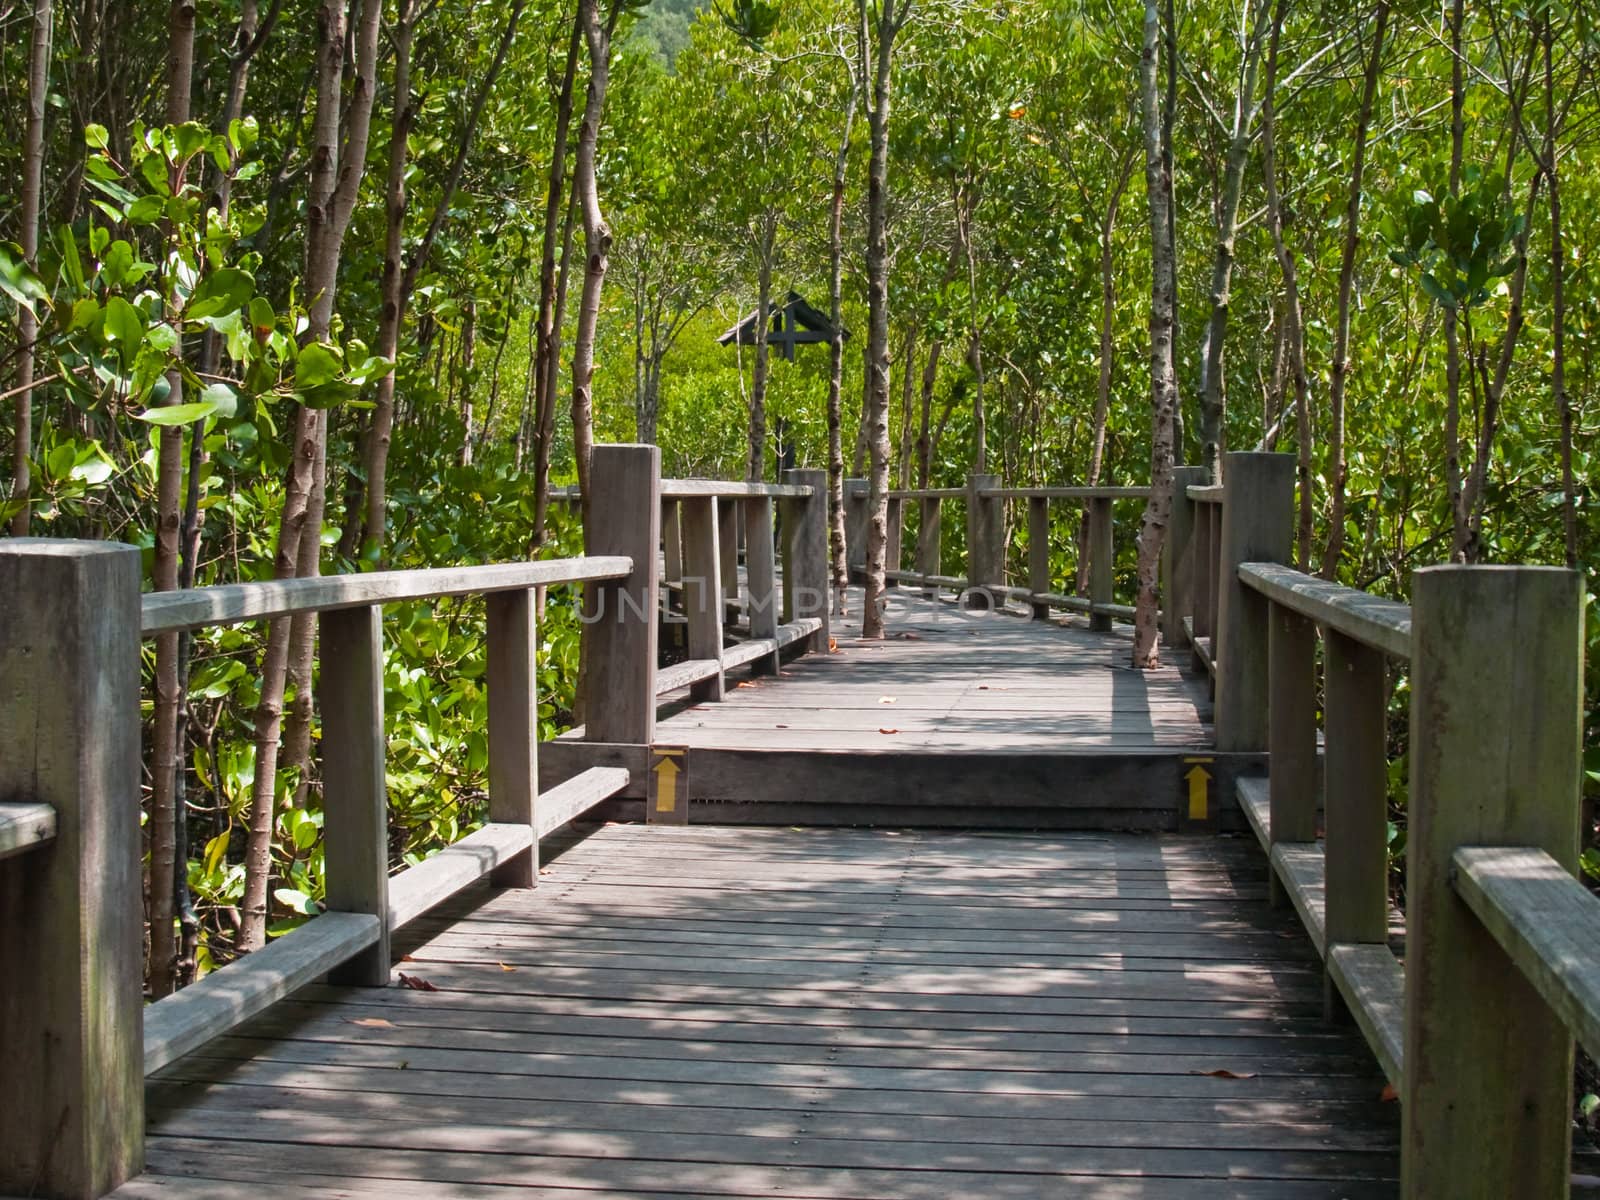 Boardwalk through the mangrove forest